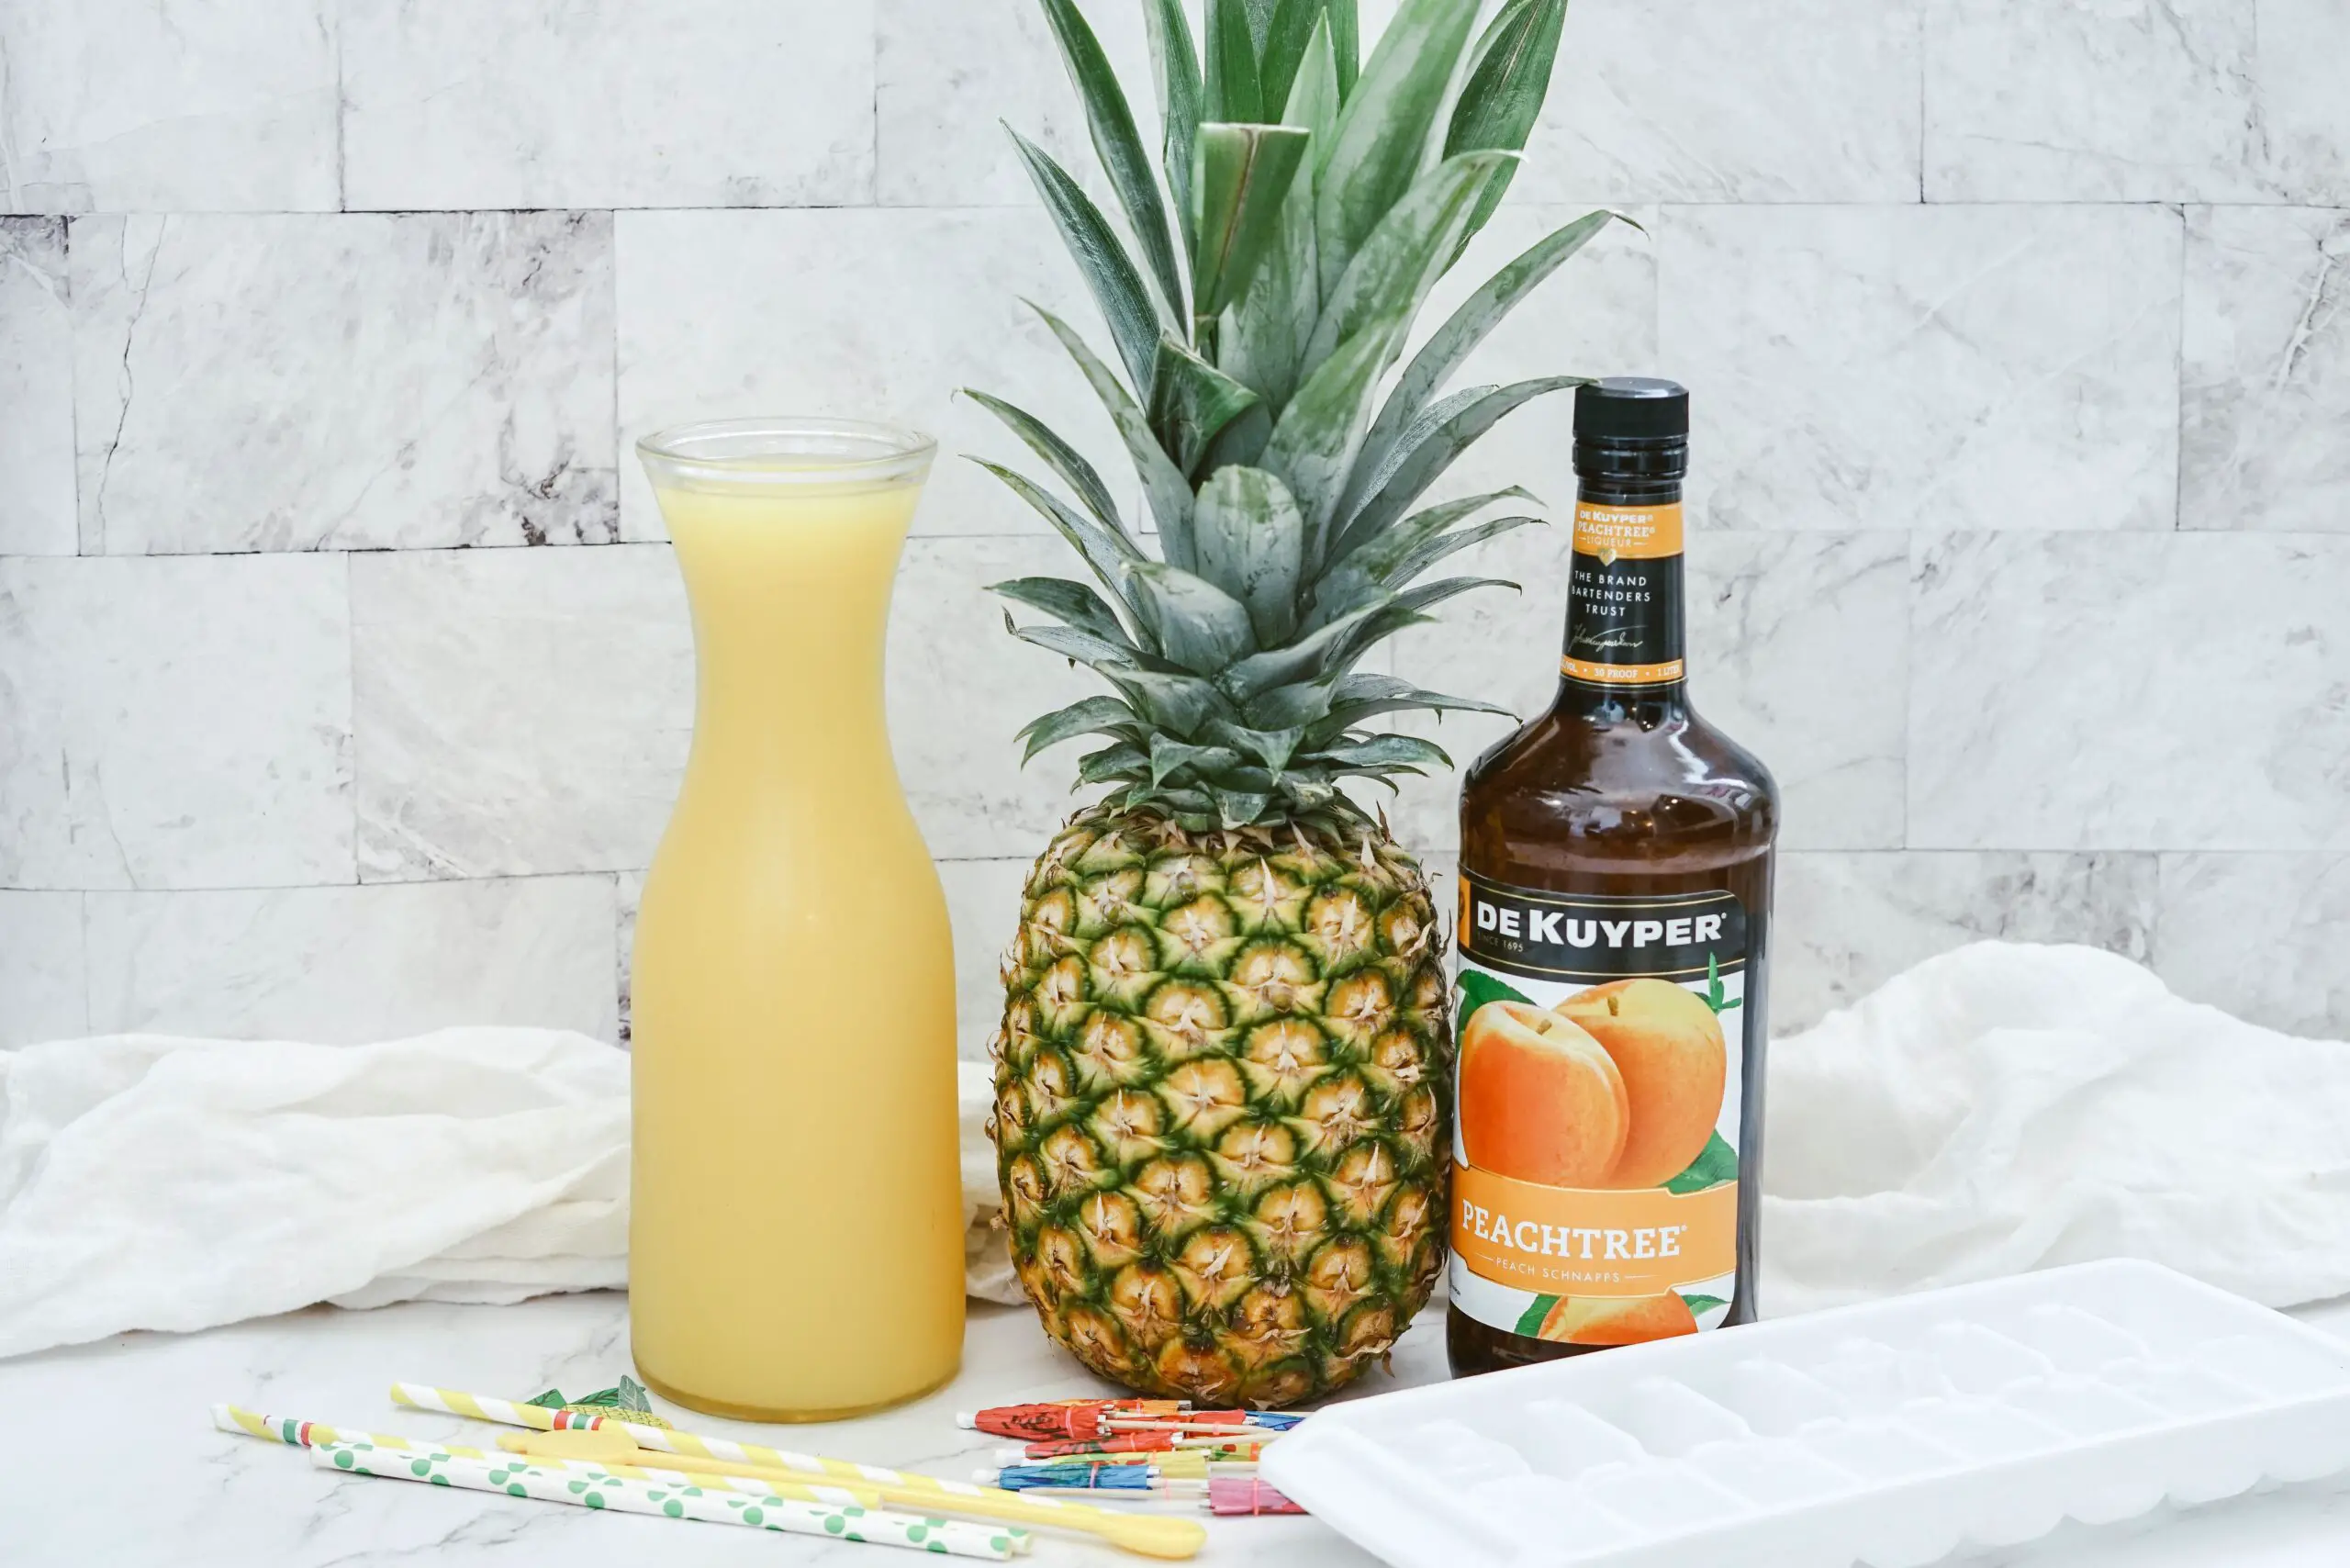 Pineapple Fuzzy Navel Ingredients